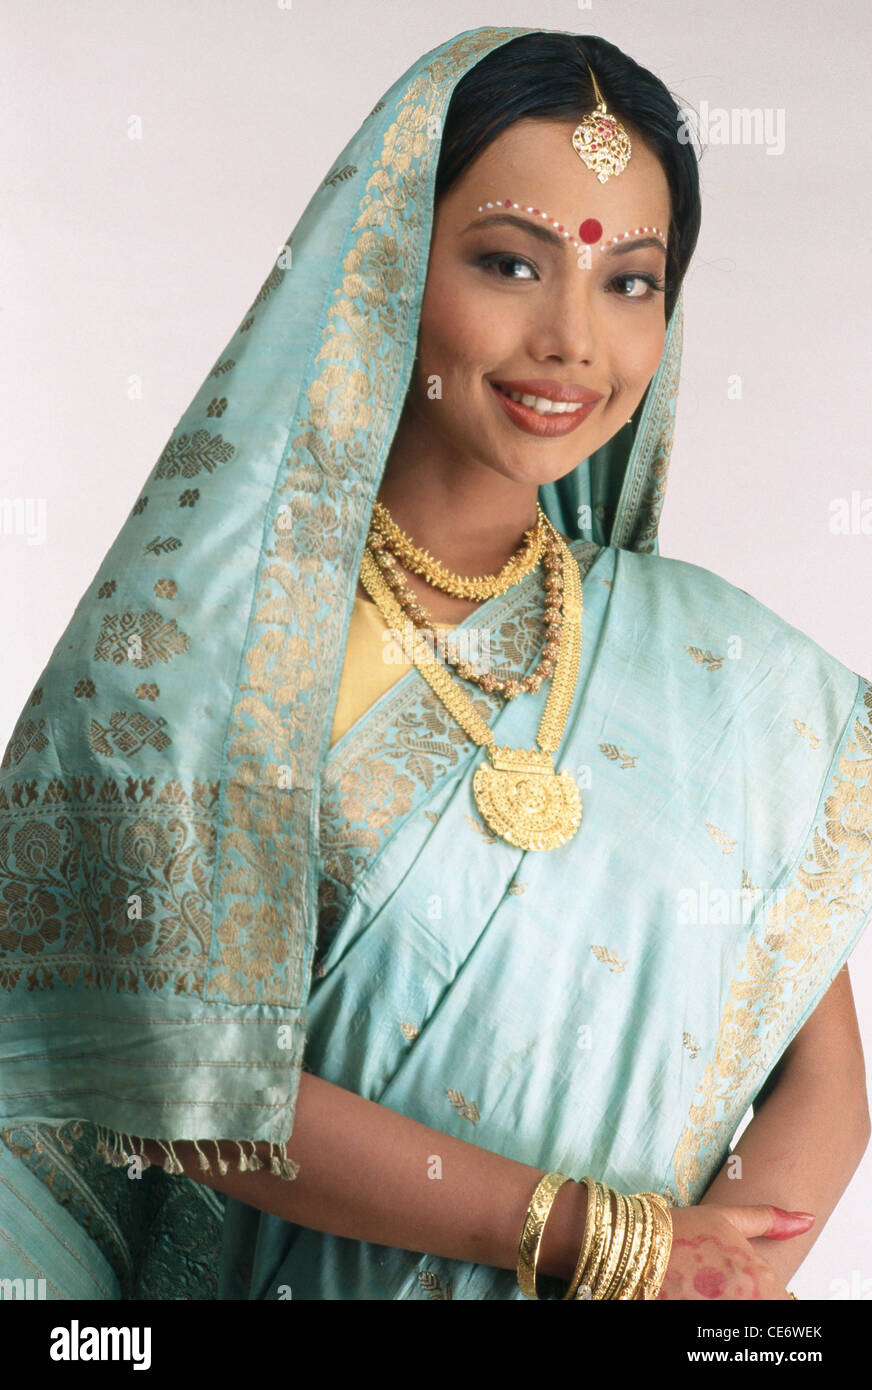 200+ Free Indian Clothing & Saree Images - Pixabay